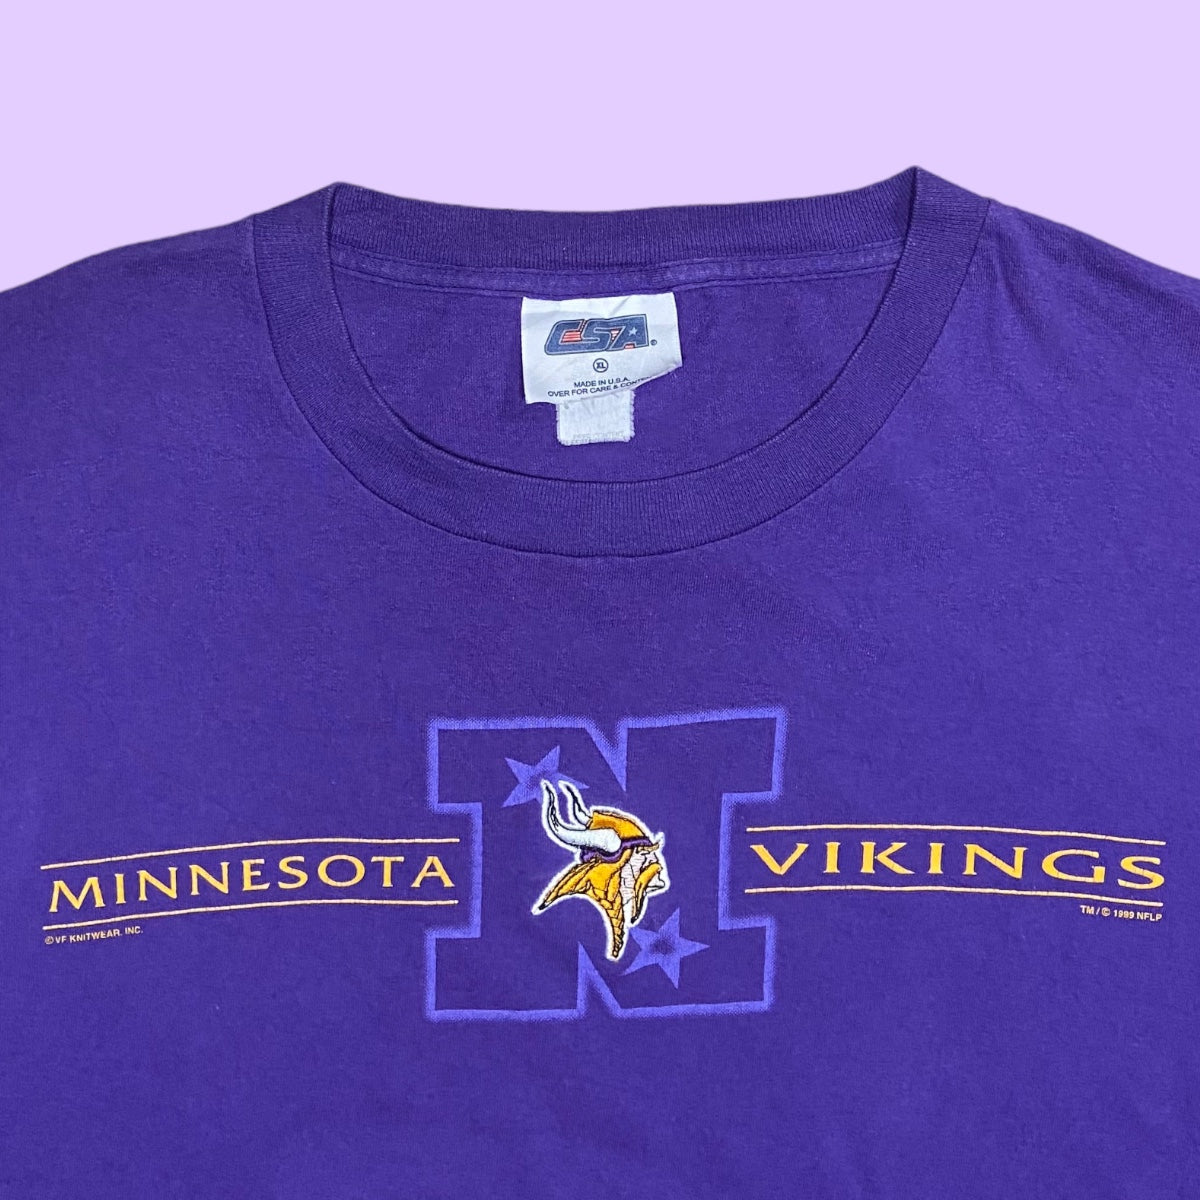 Vintage 90s CSA Minnesota Vikings t-shirt - XL